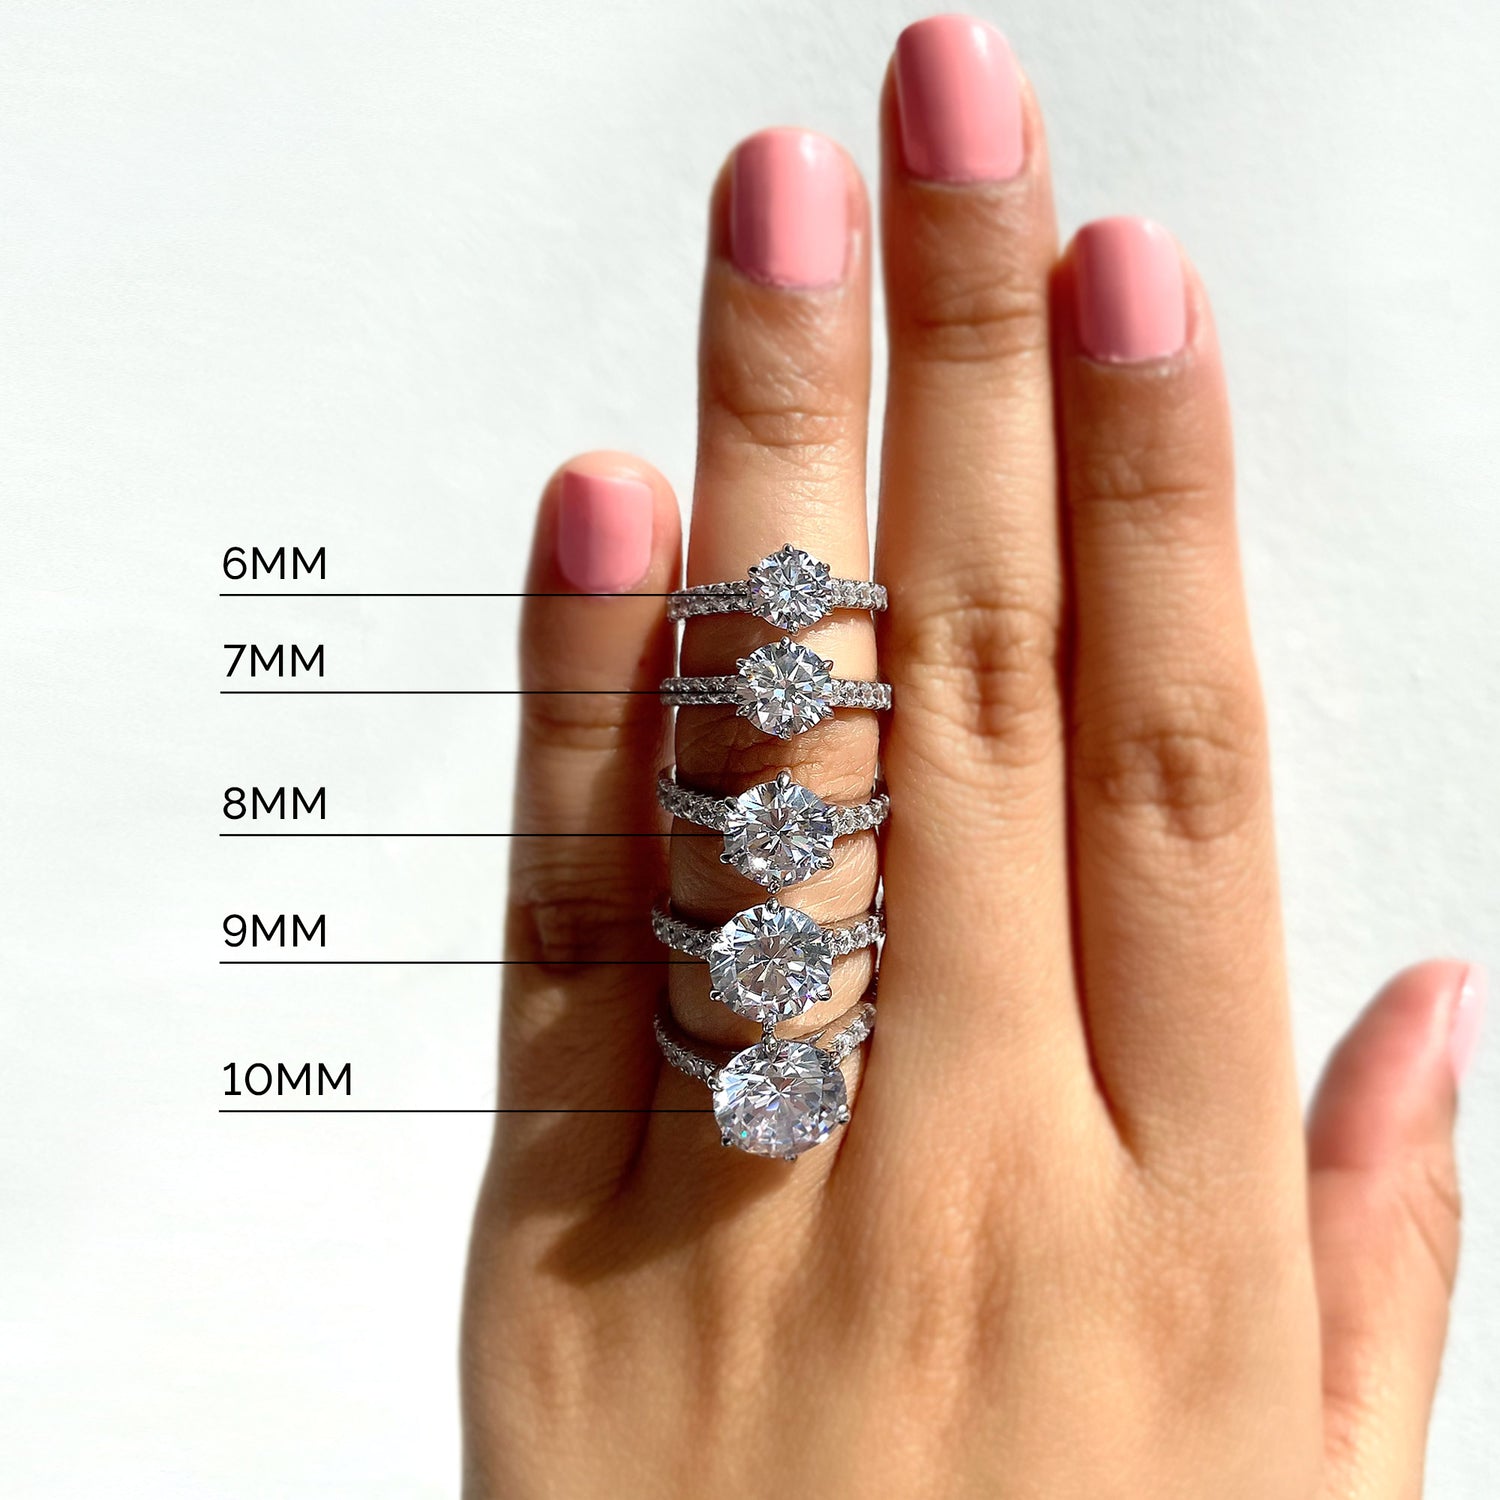 diamond carat sizes mm on a hand featuring various diamond carat weights